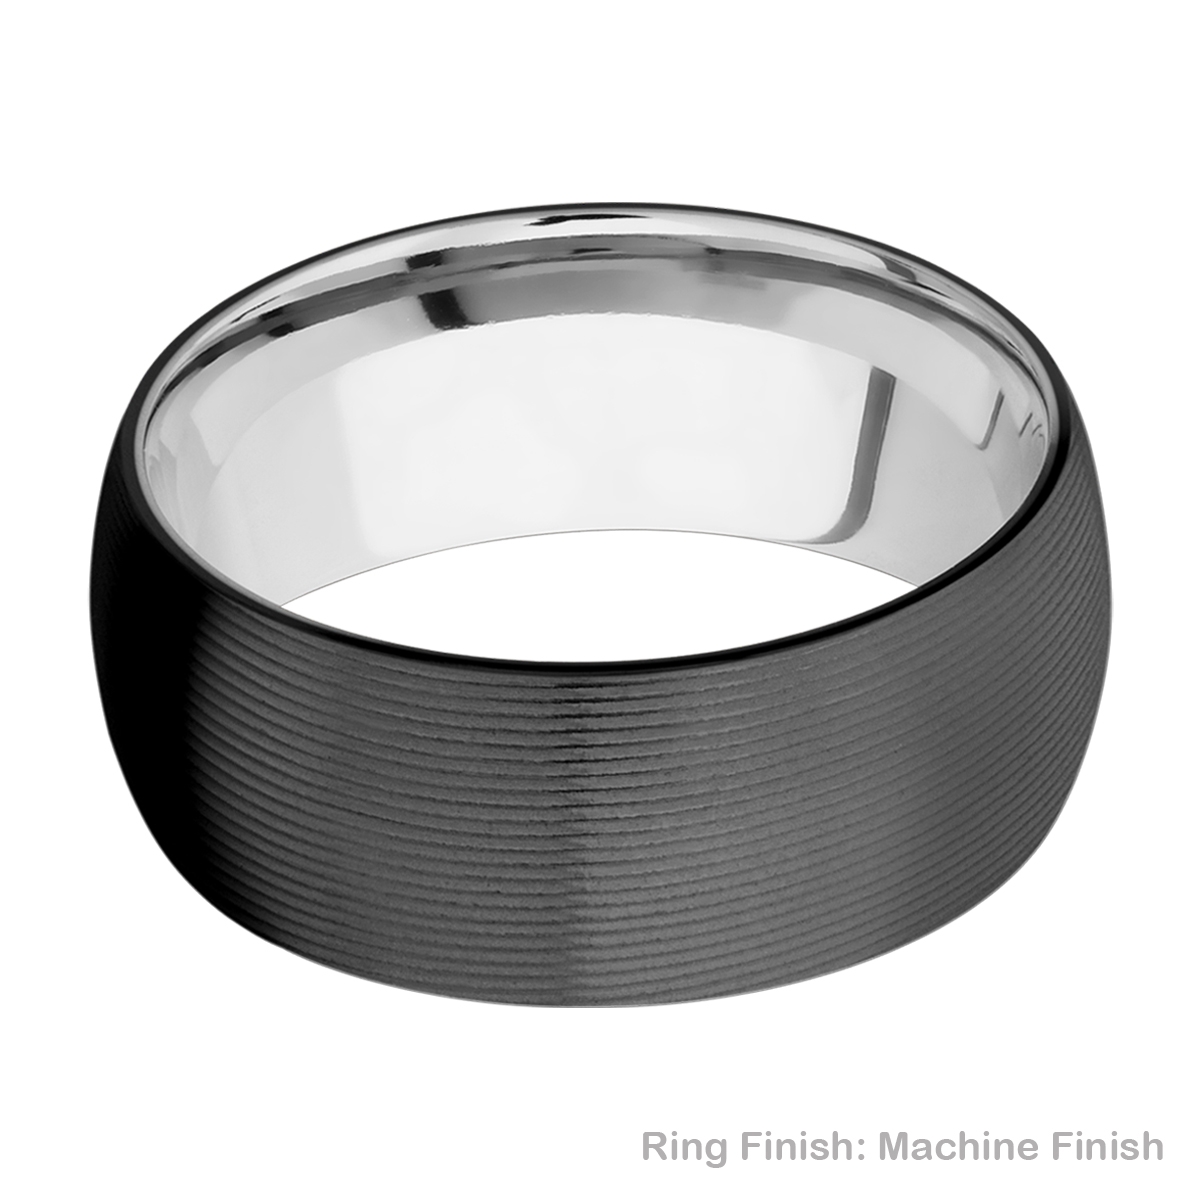 Lashbrook CCSLEEVEZ9D Zirconium and Cobalt Chrome Wedding Ring or Band